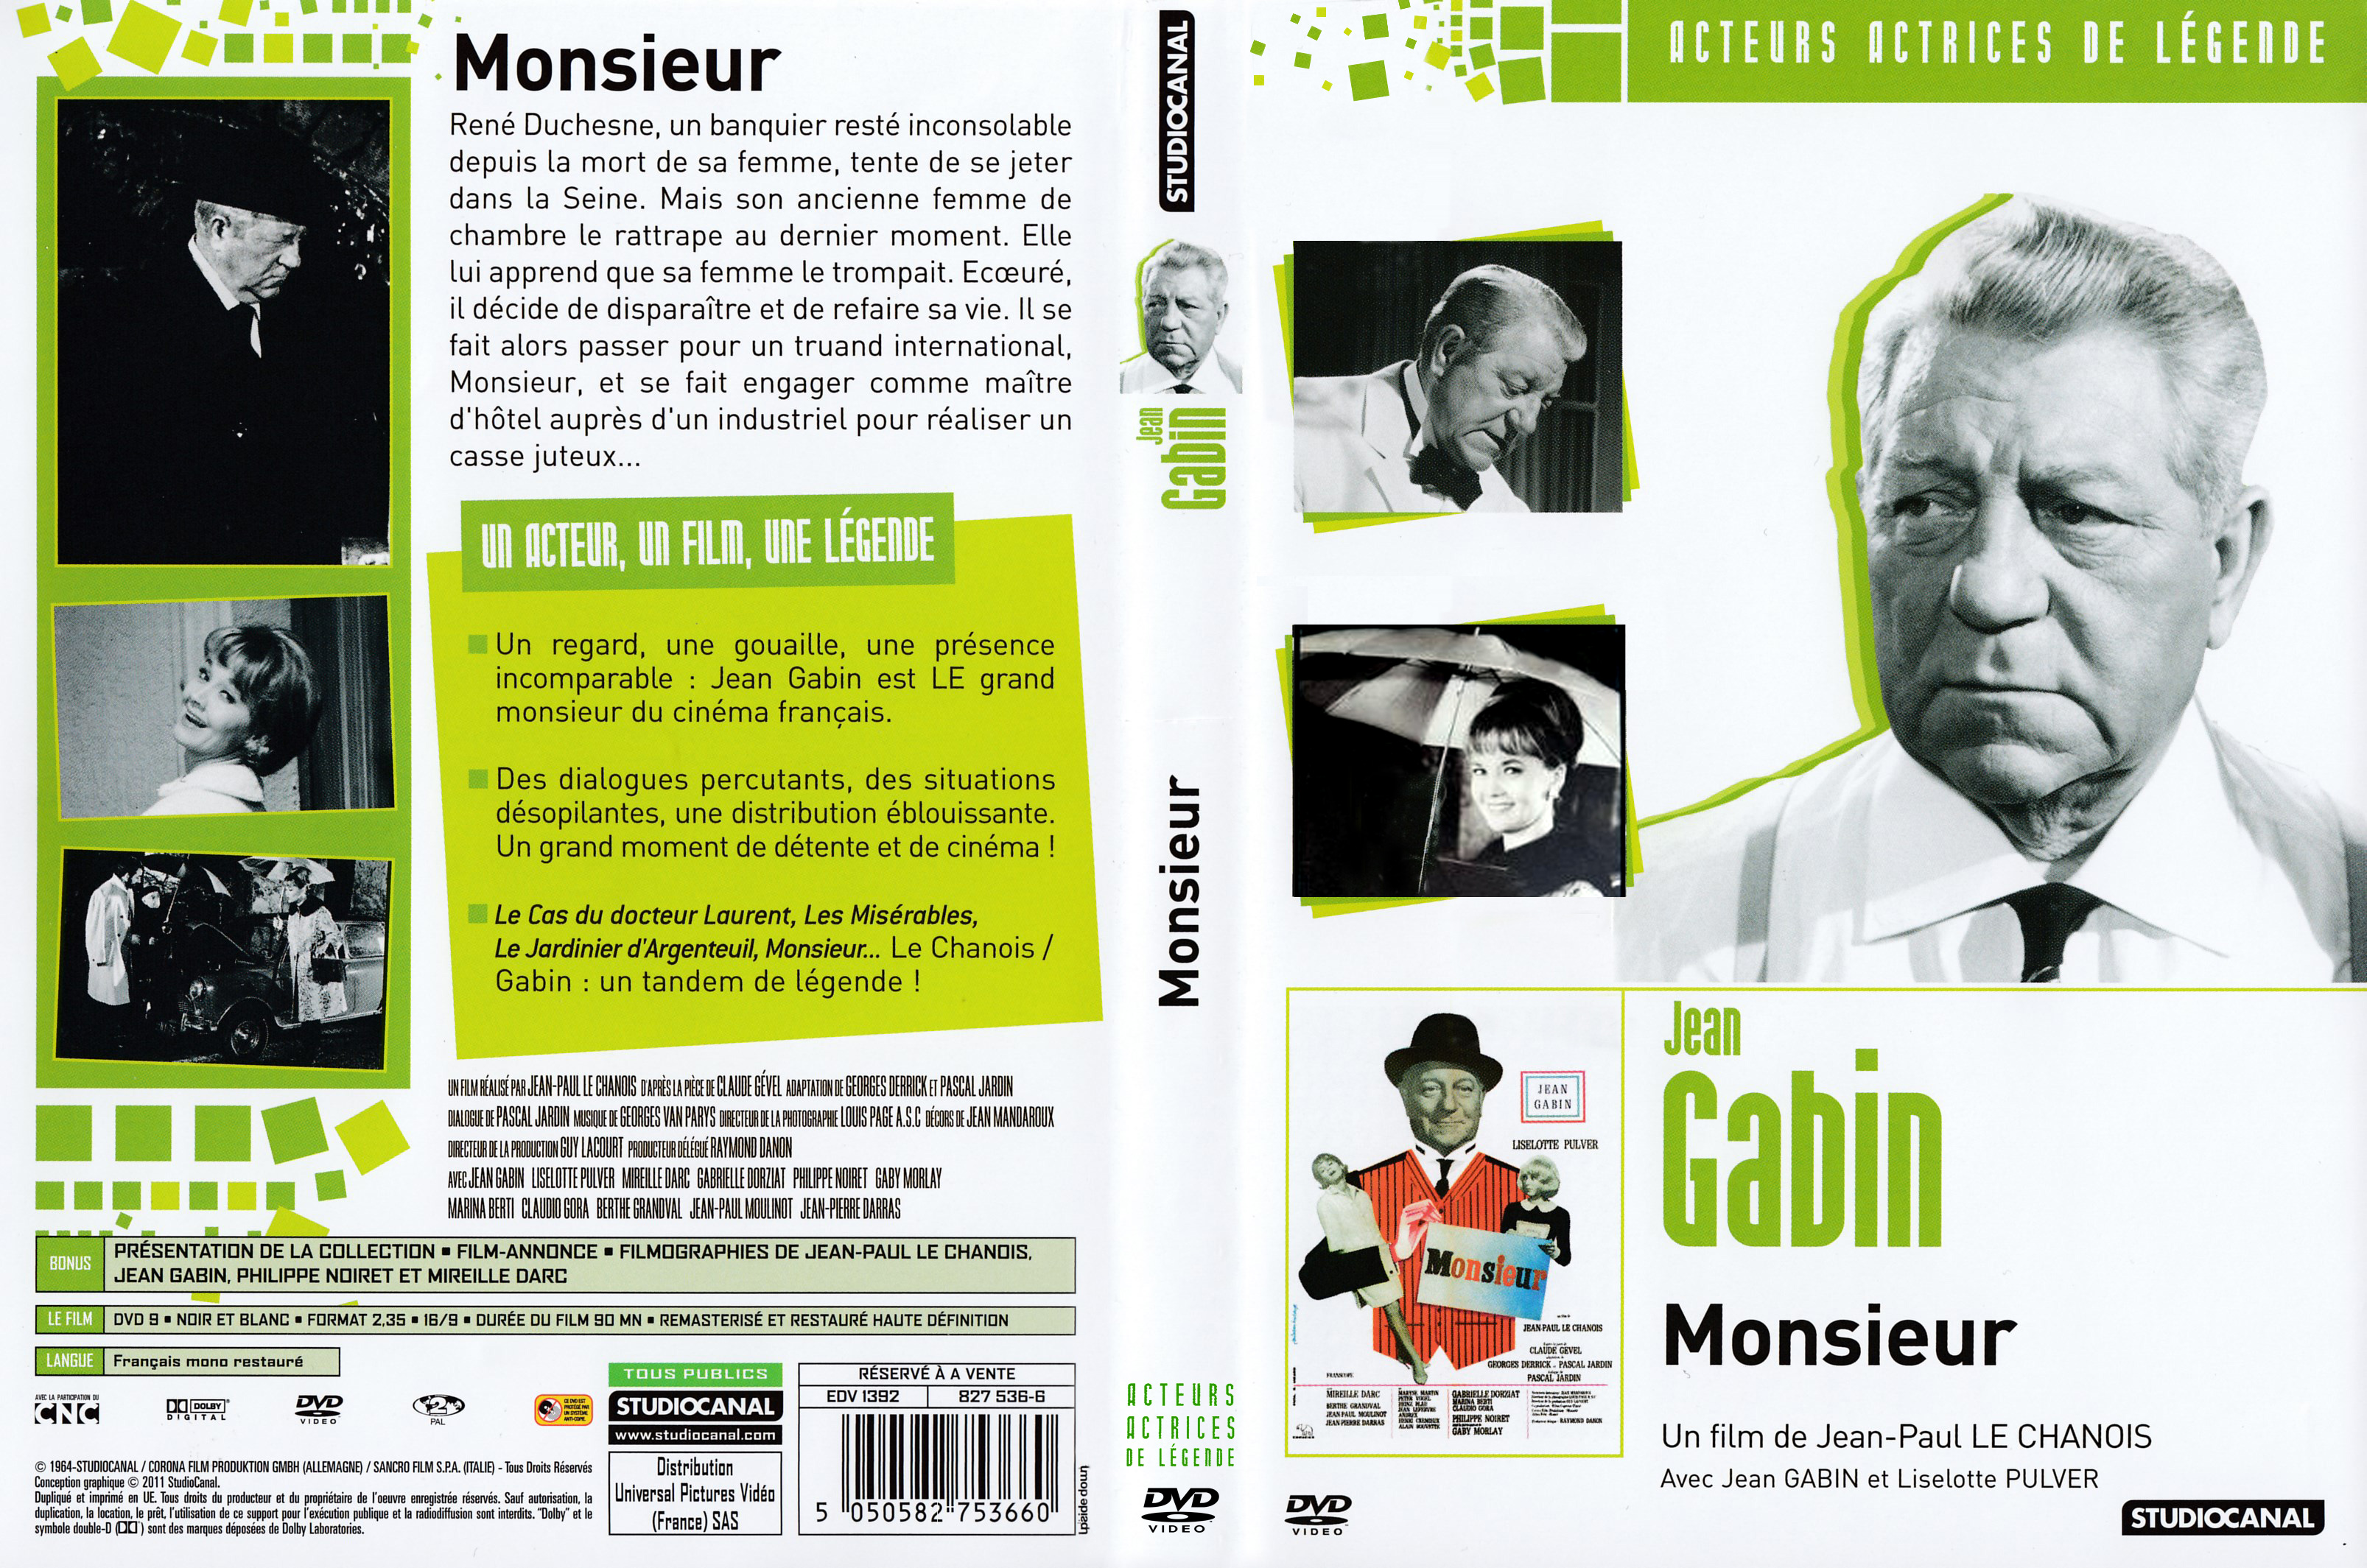 Jaquette DVD Monsieur v2